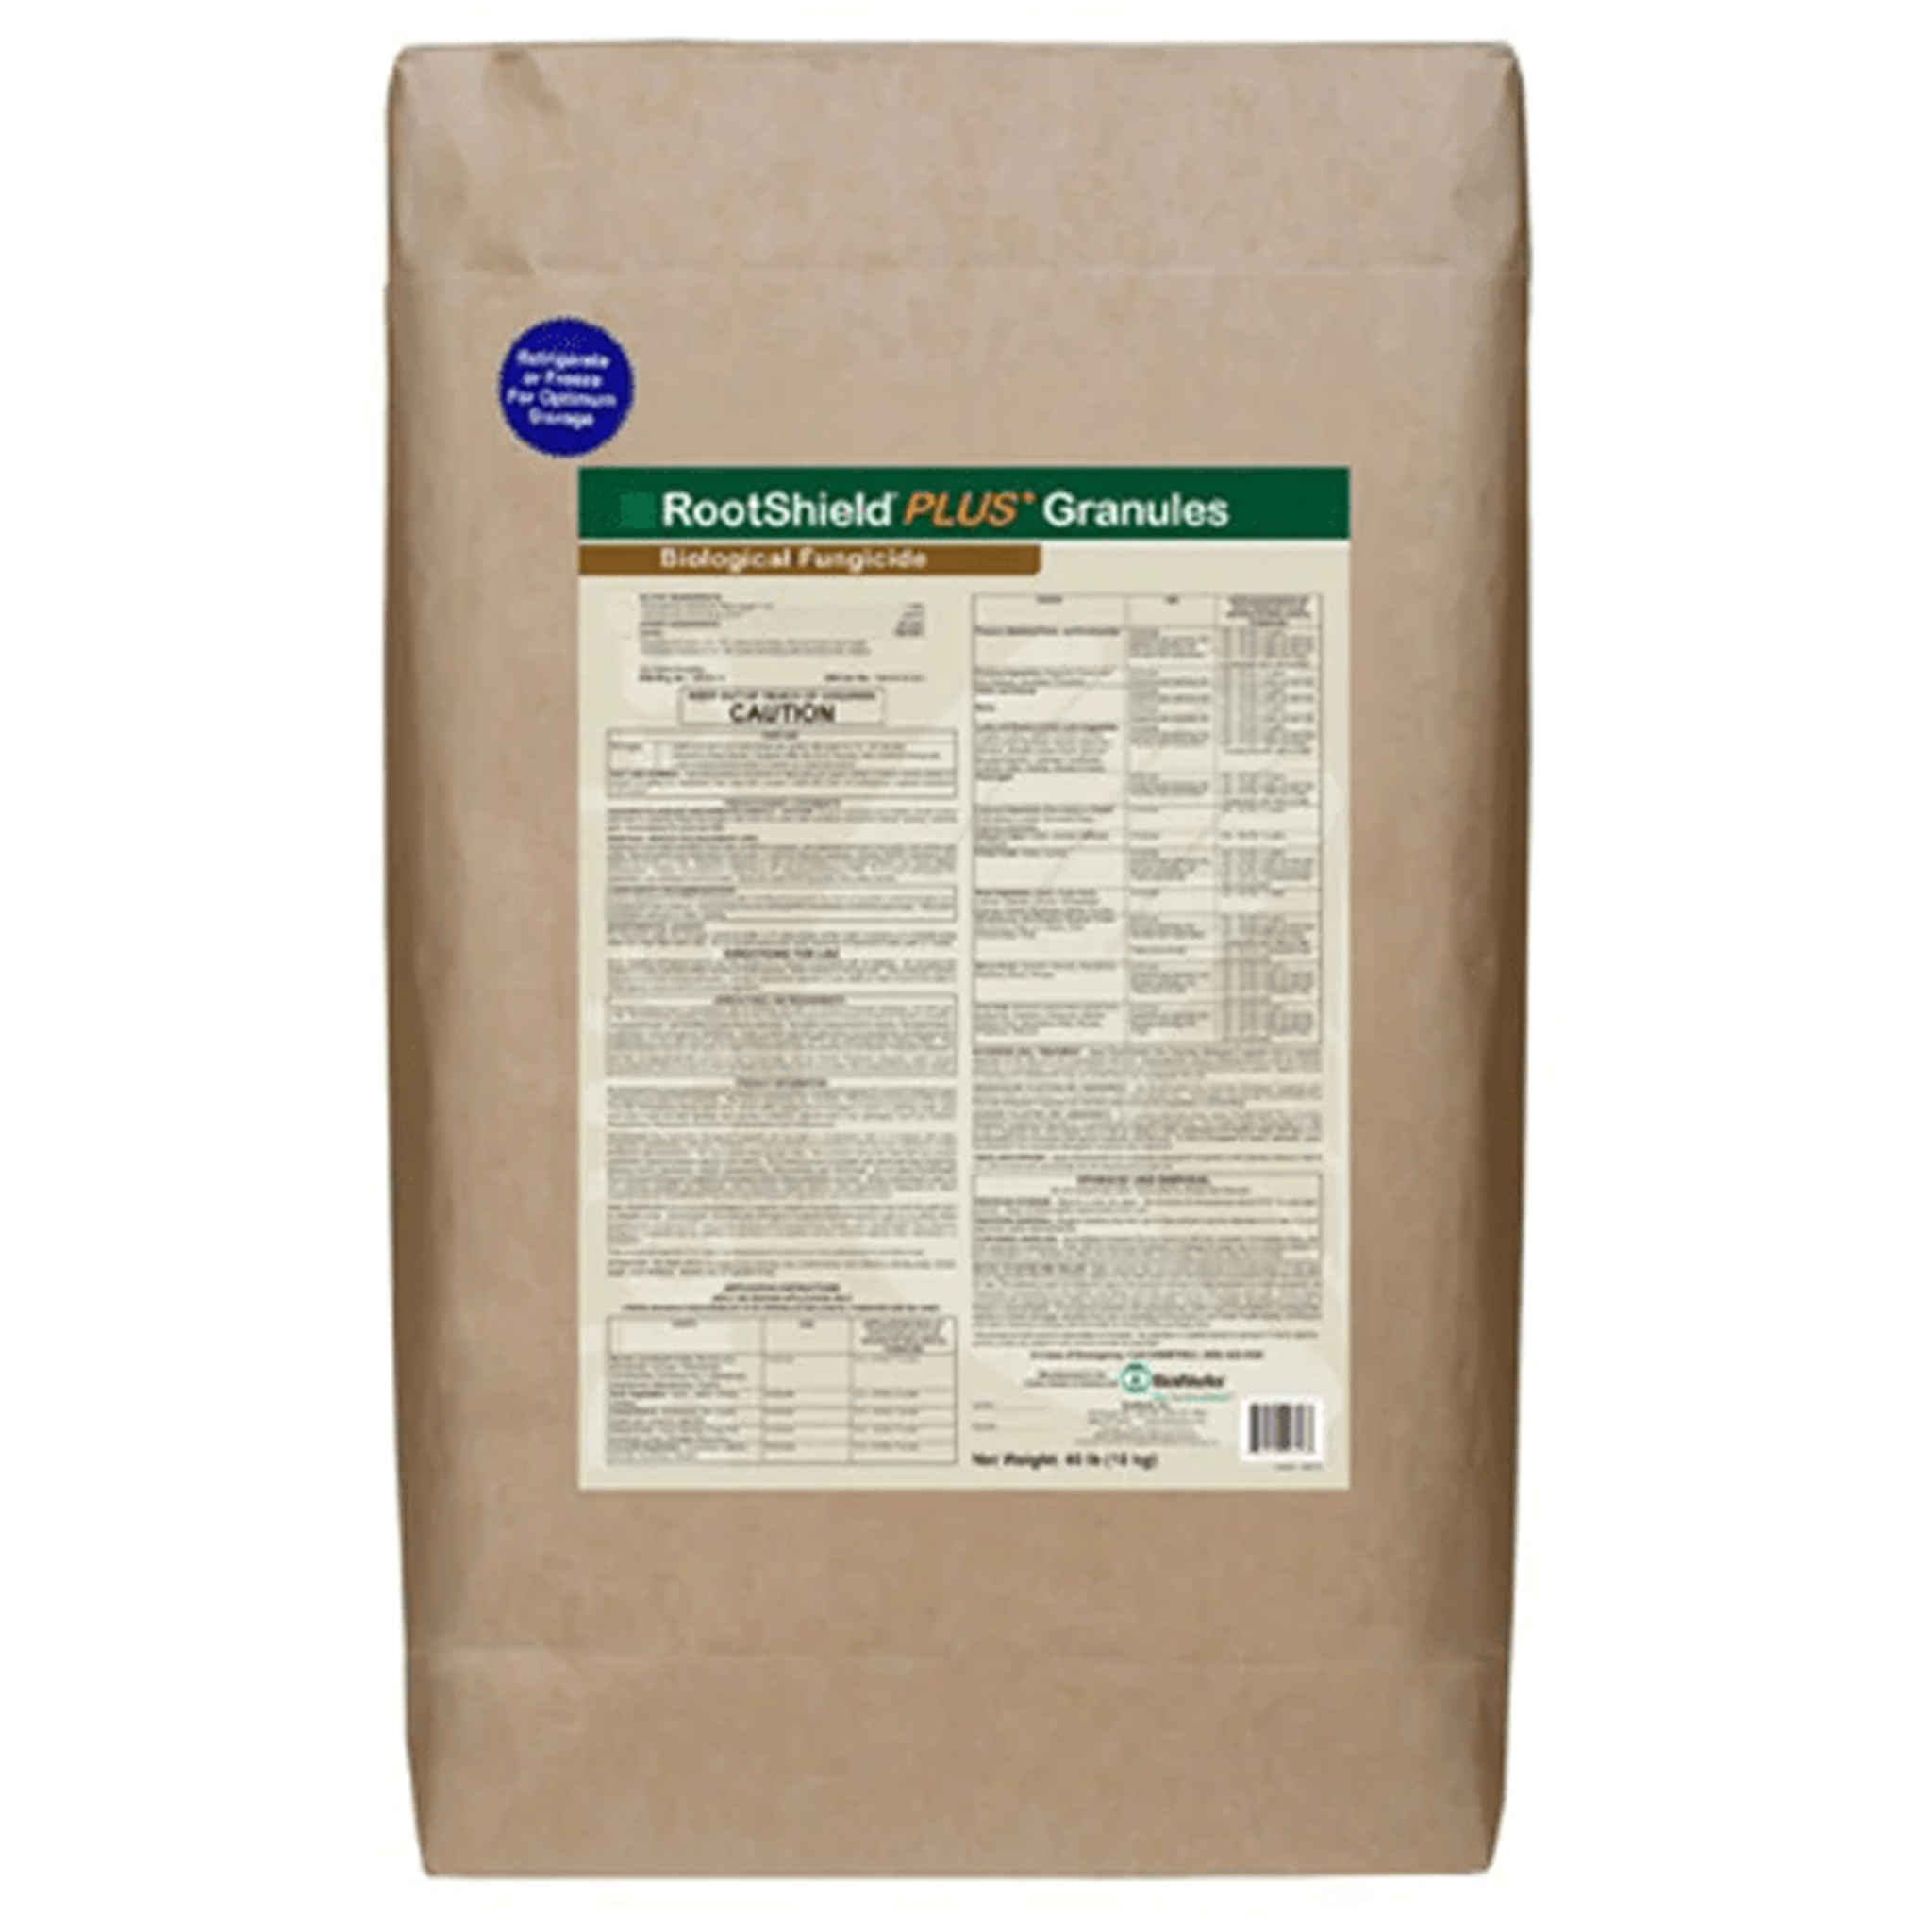 RootShield Plus Granules 50 pound bag